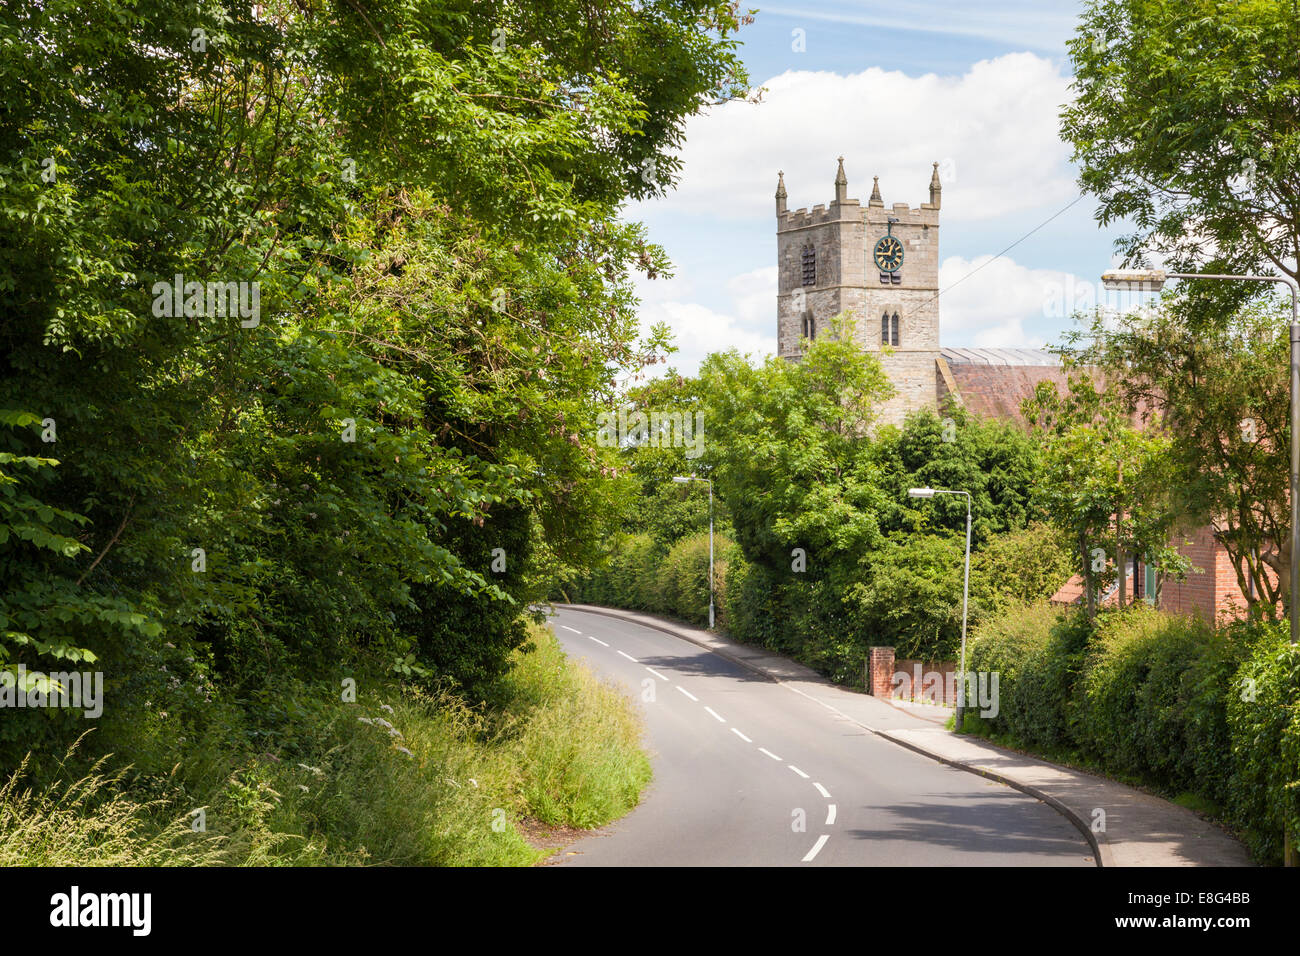 La iglesia de St Andrew's visto desde la carretera a la aldea rural de Eakring, Nottinghamshire, Inglaterra, Reino Unido. Foto de stock